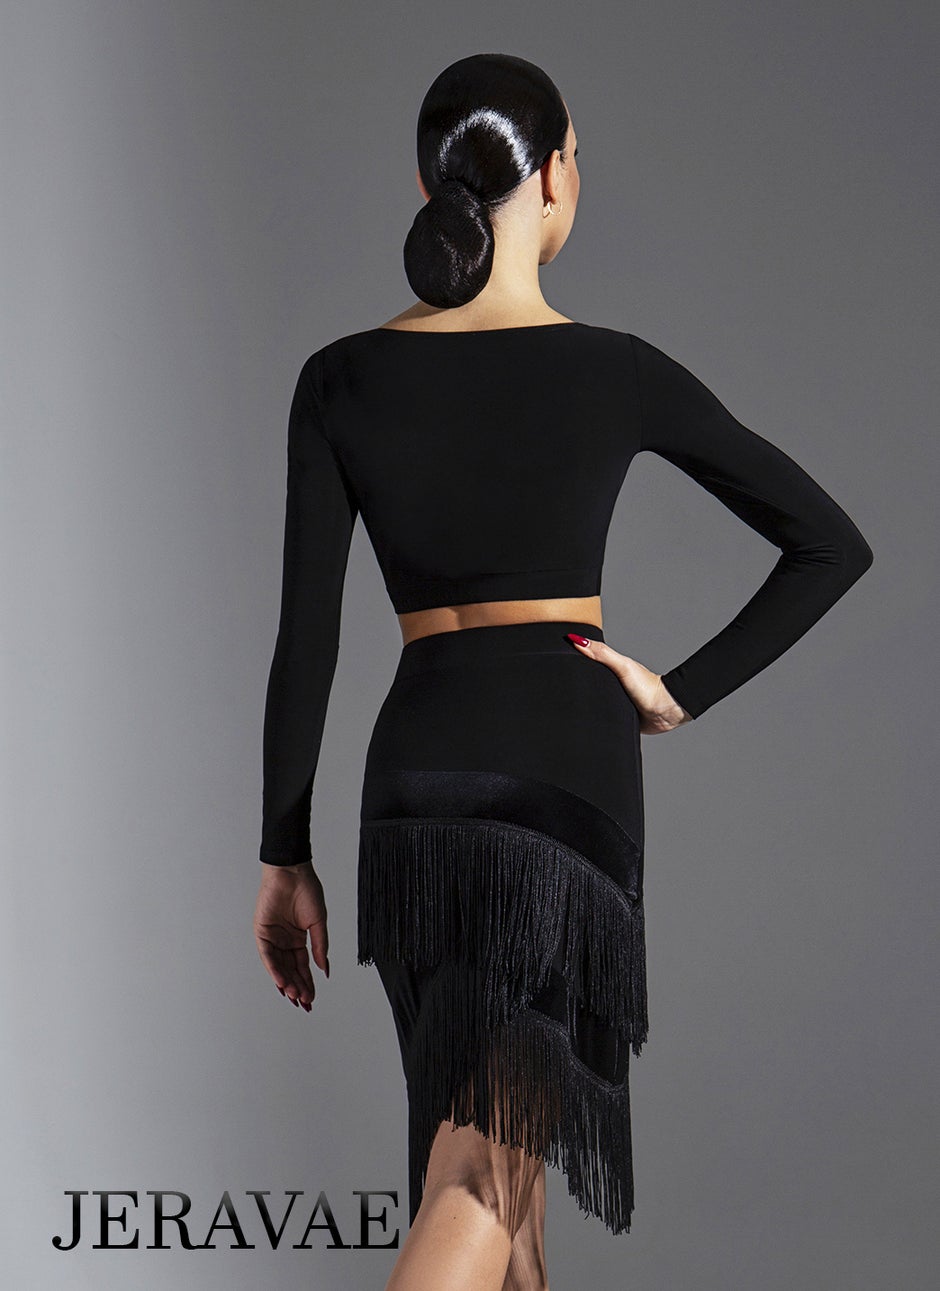 Fringe layers and velvet accents on black latin practice skirt